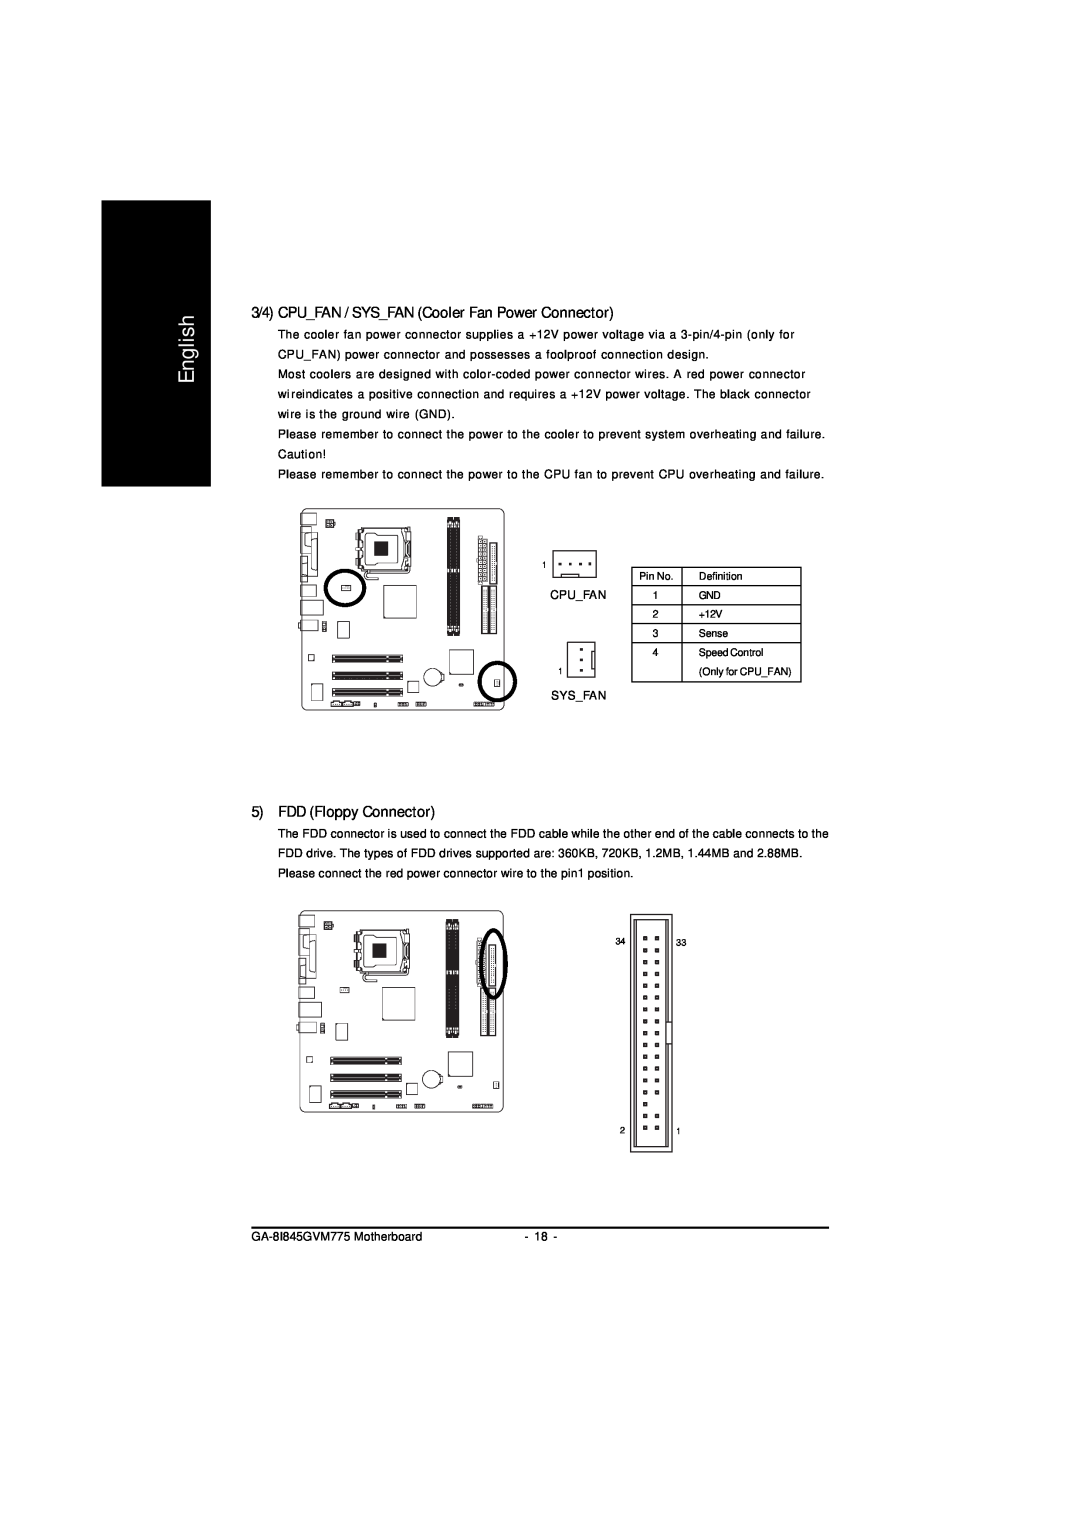 Gigabyte GA-8I845GVM775 user manual 3/4 CPUFAN / SYSFAN Cooler Fan Power Connector, FDD Floppy Connector, English 